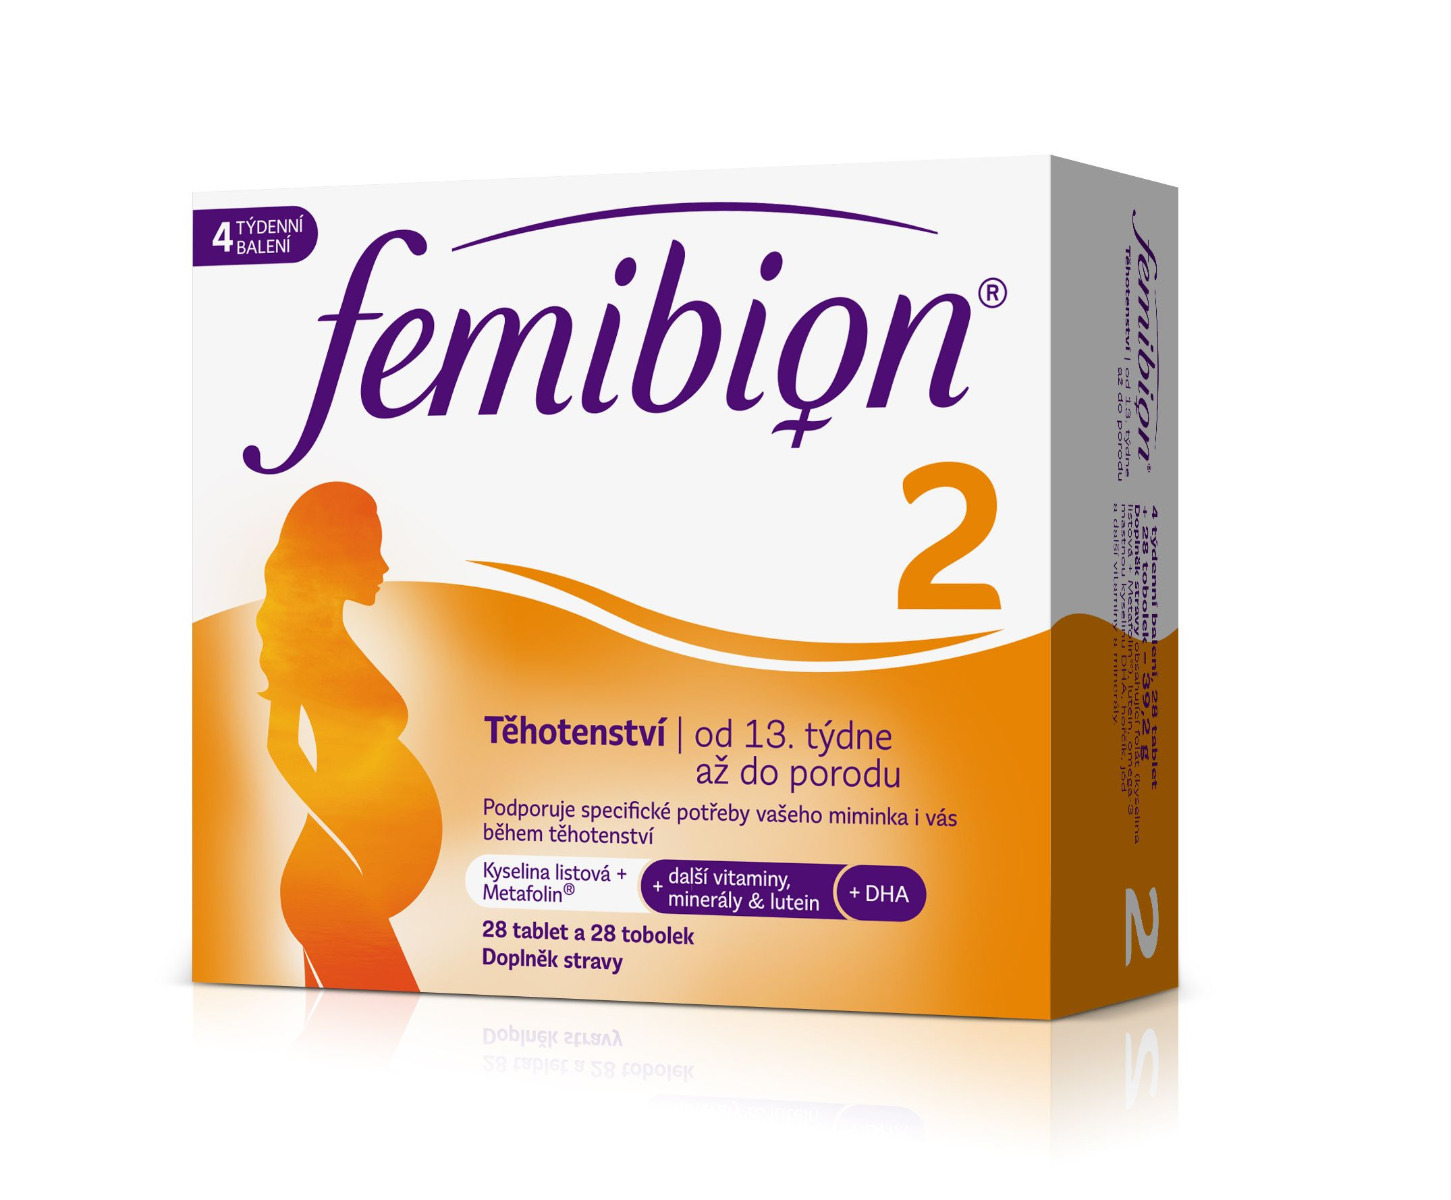 Femibion 2 Těhotenství 28 tablet + 28 tobolek Femibion